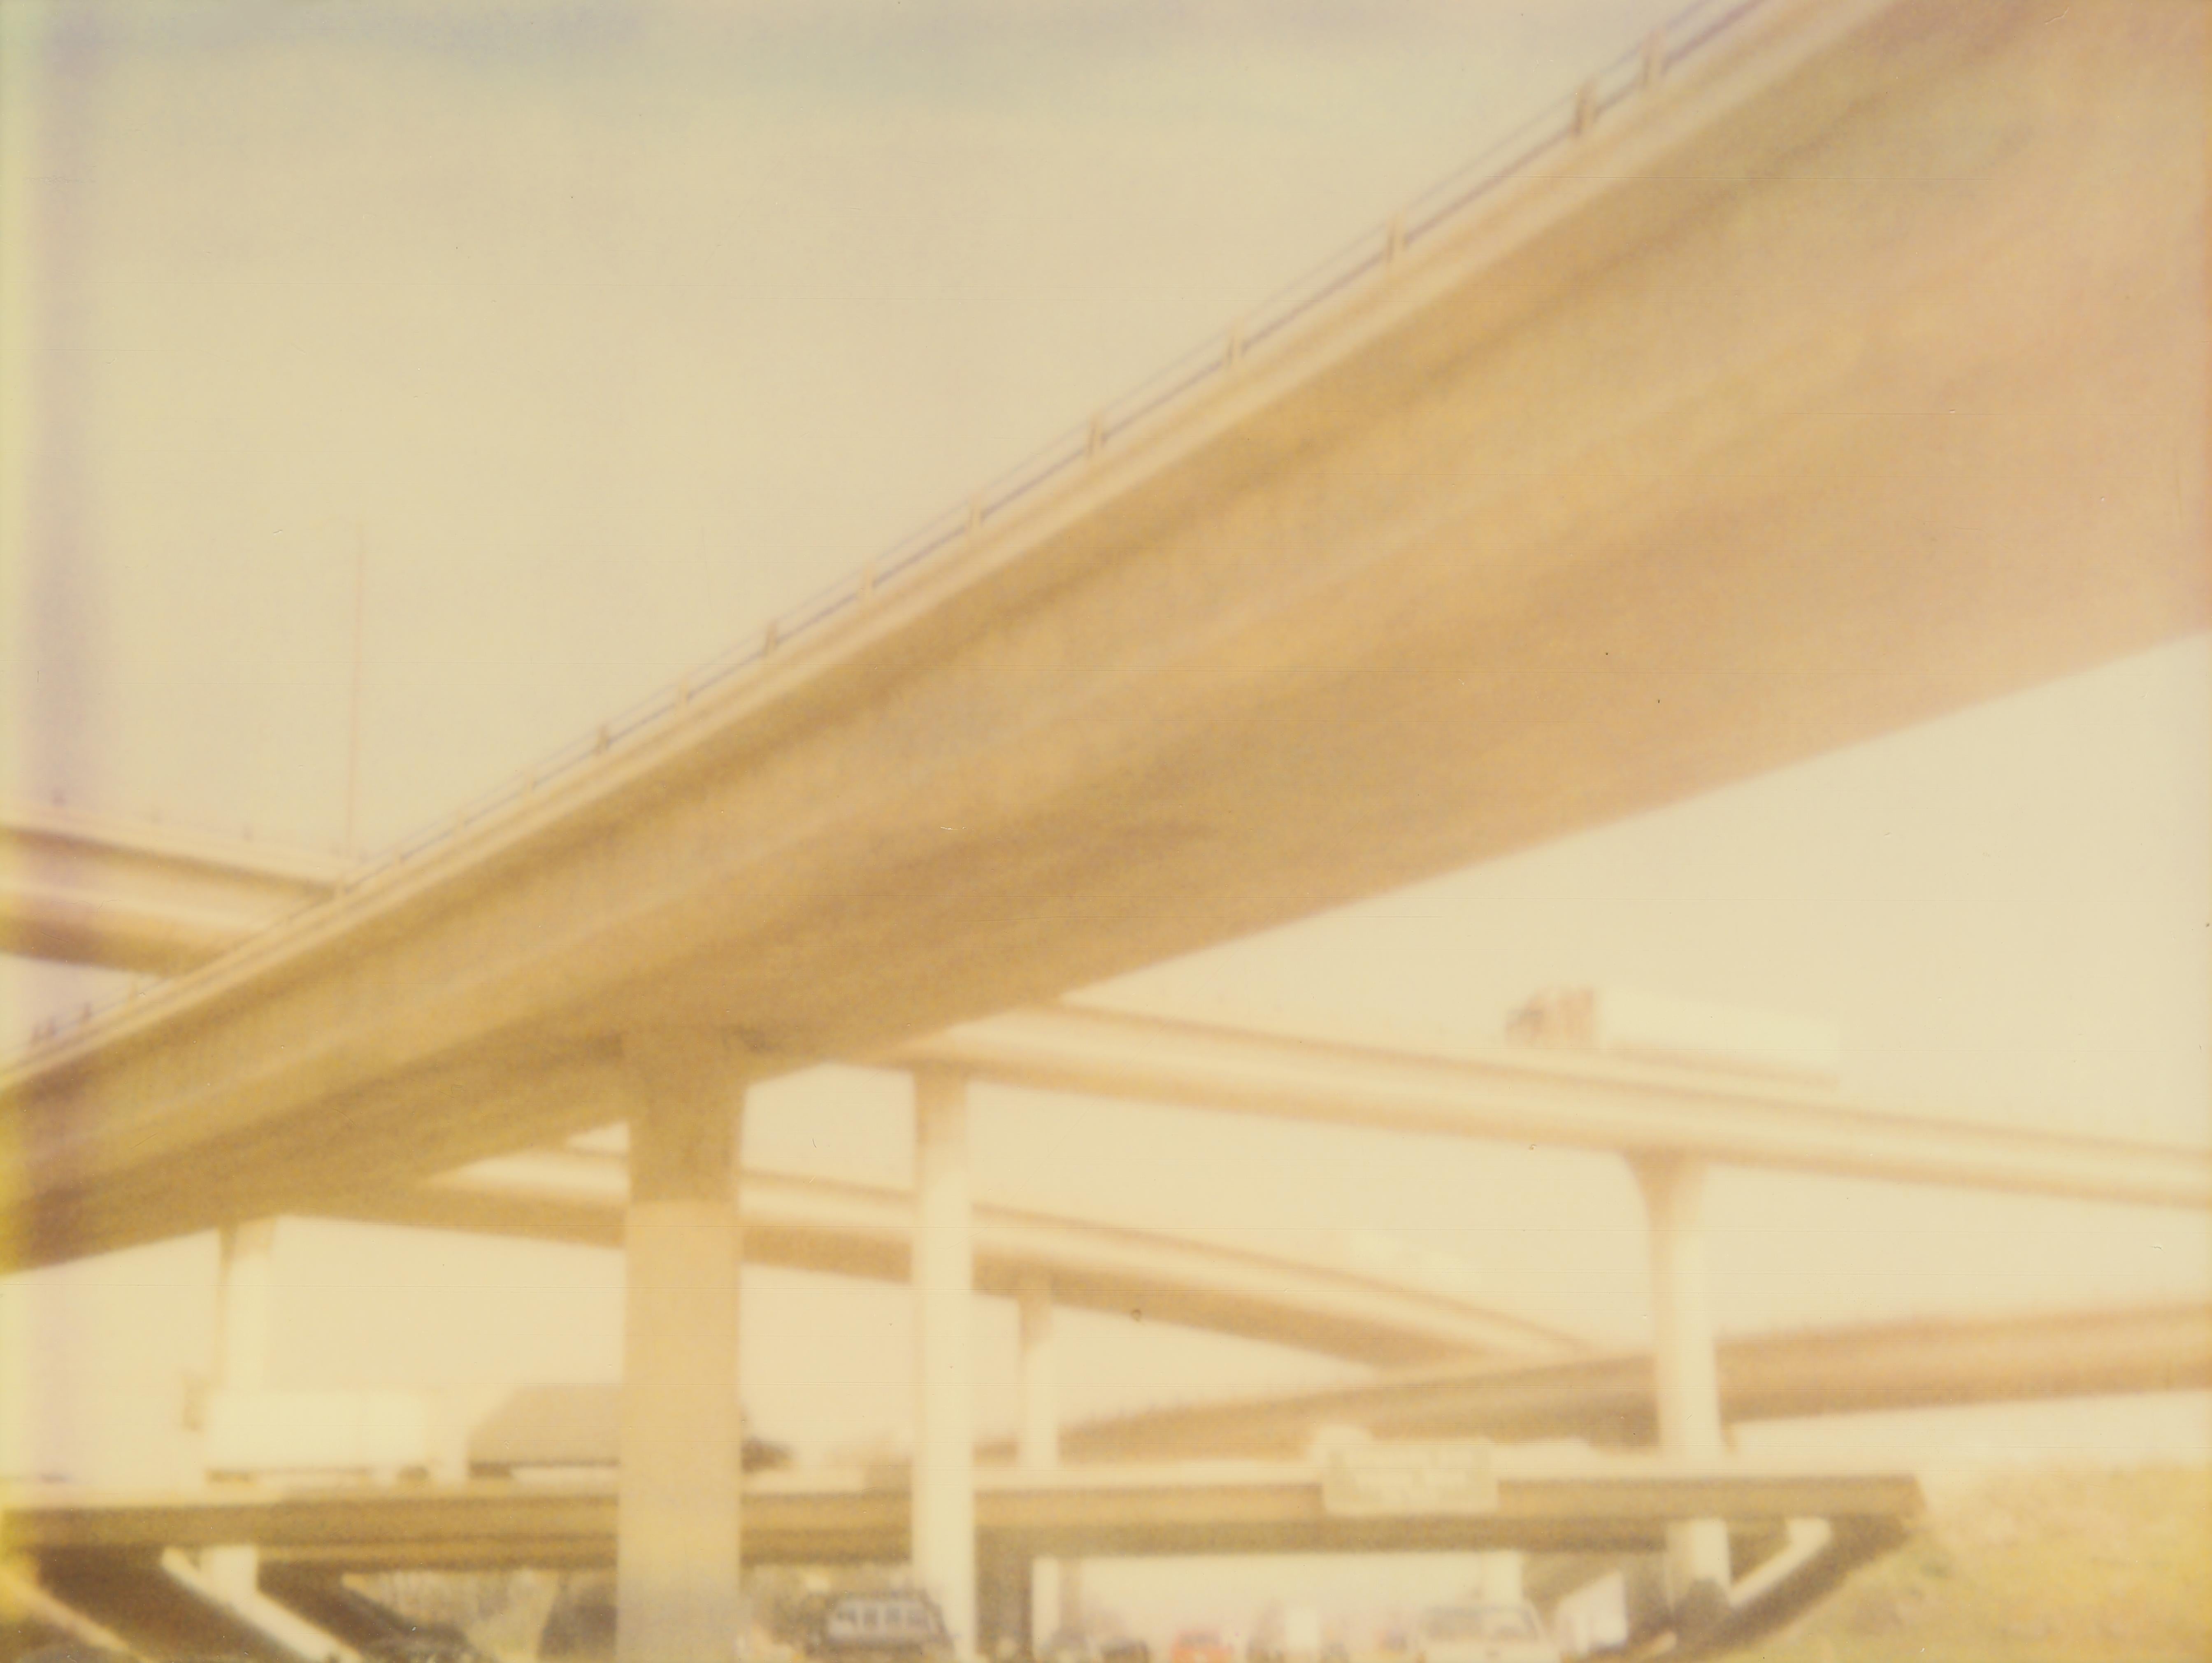 Stefanie Schneider Color Photograph - Interstate 10 Overpass (Drive to the Desert) - analog hand-print